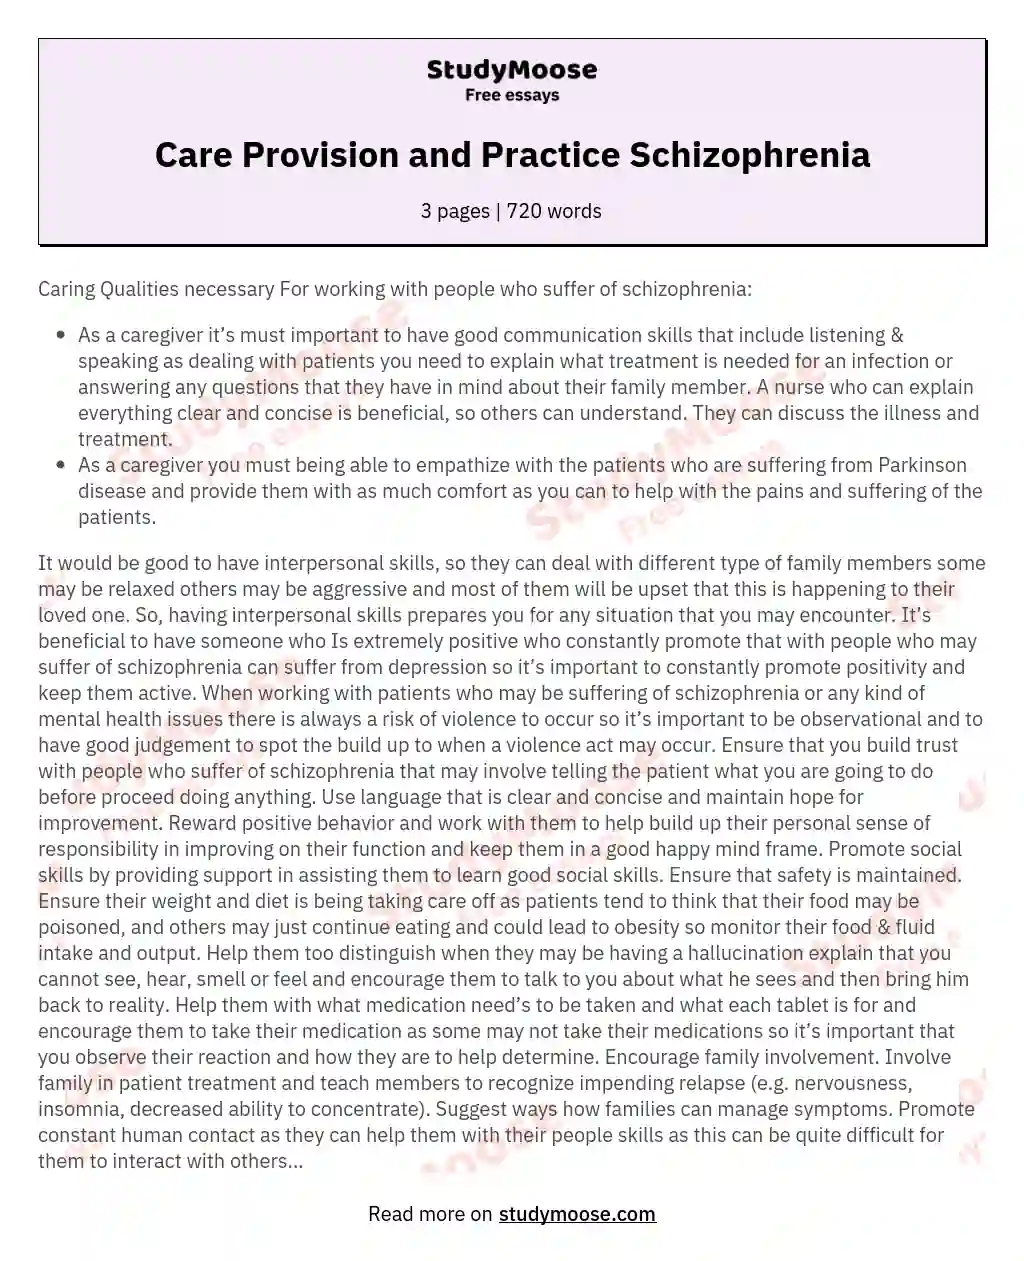 Care Provision and Practice Schizophrenia essay